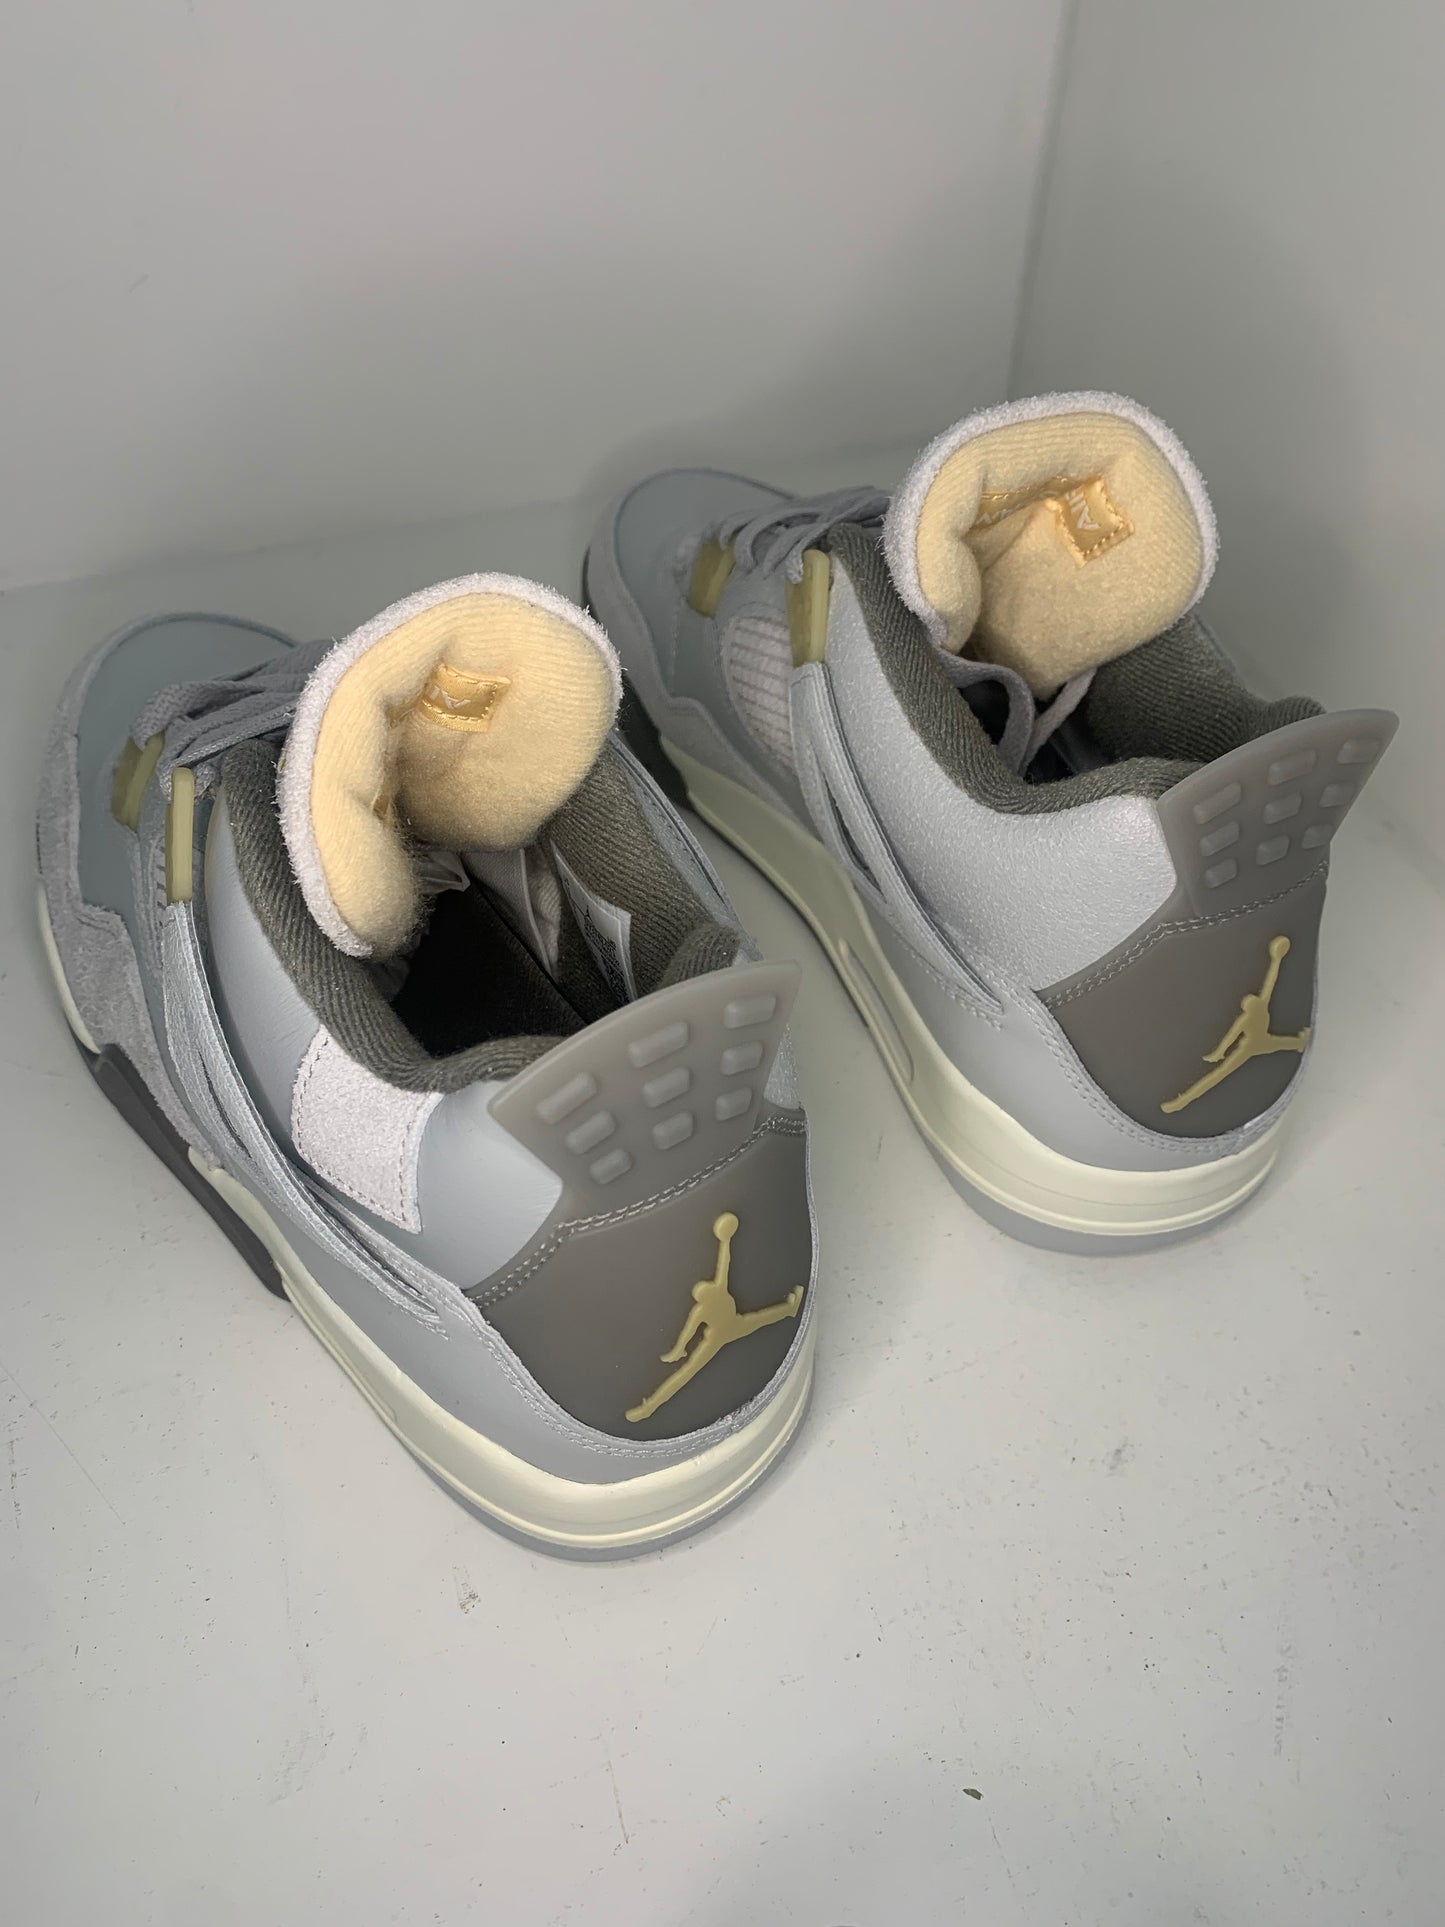 Air Jordan 4 Retro SE 'Craft'